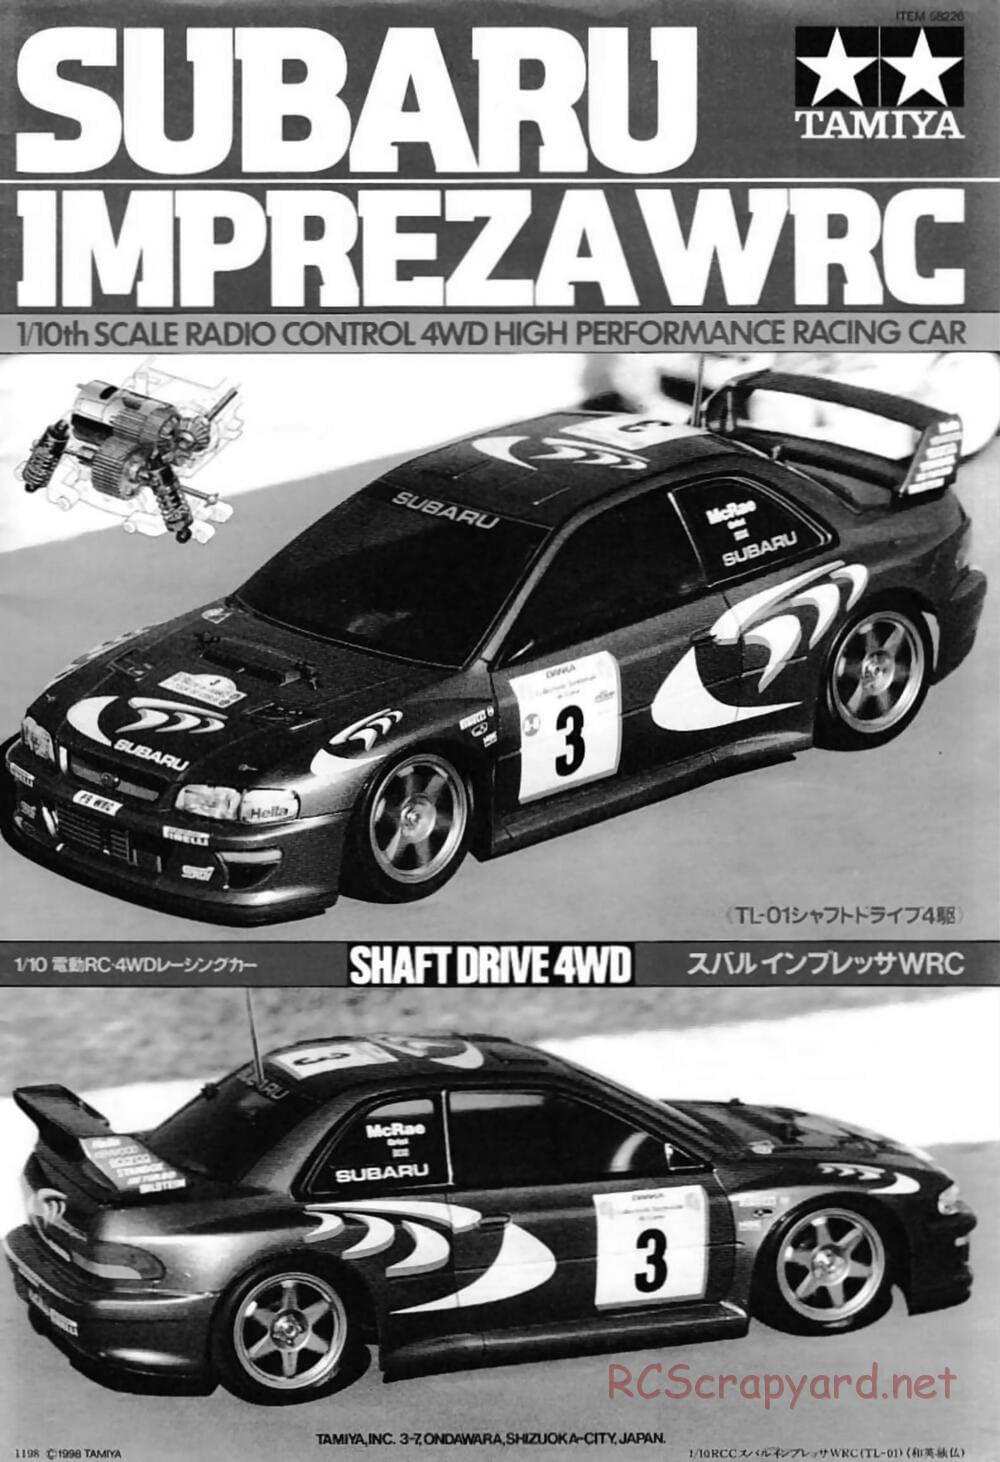 Tamiya - Subaru Impreza WRC - TL-01 Chassis - Manual - Page 1